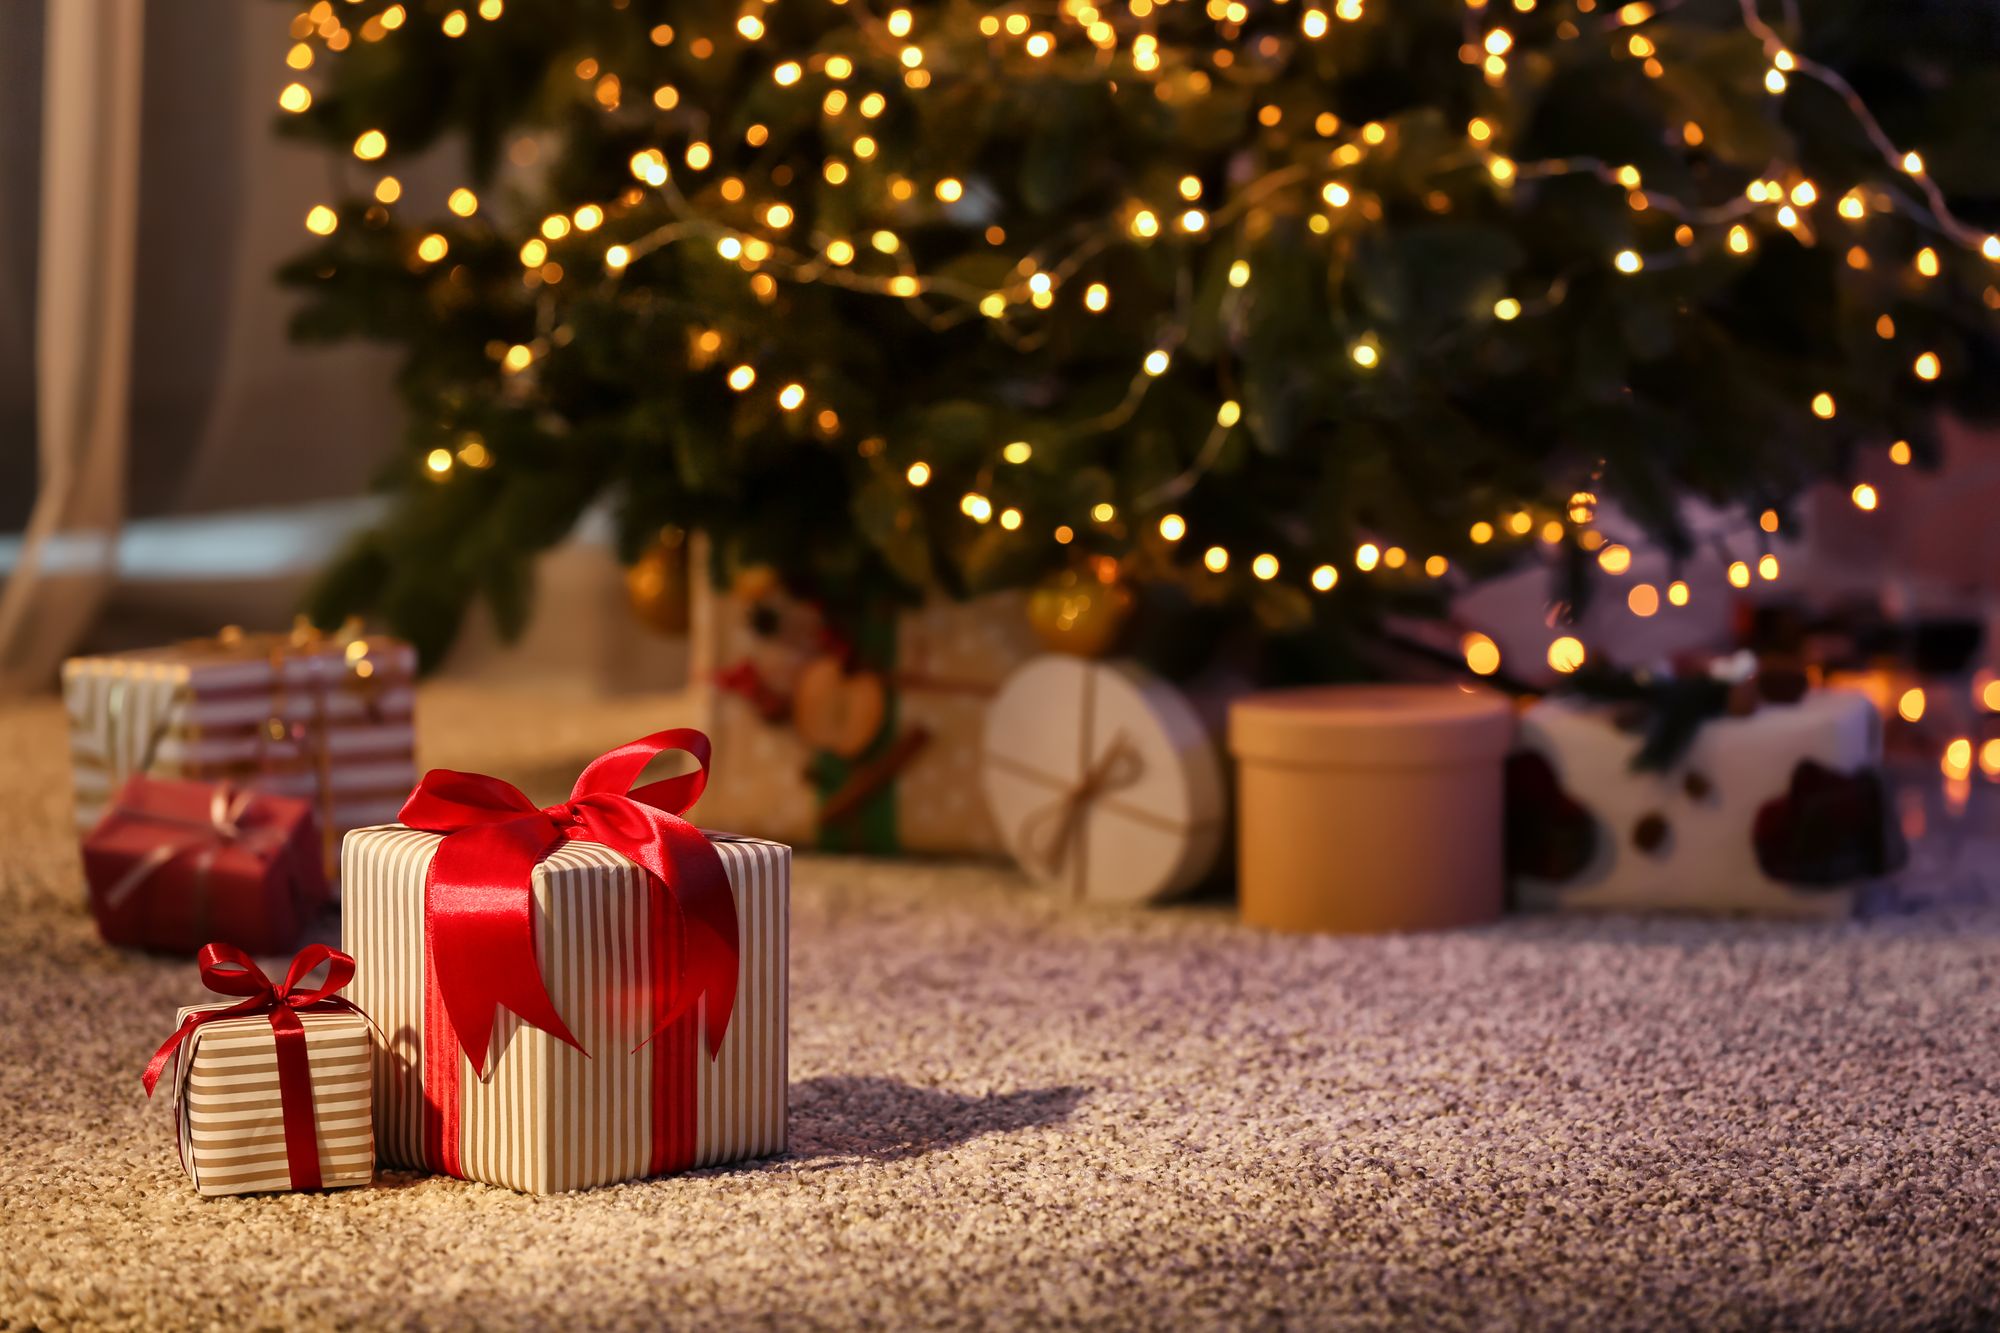 Beauty Guide: ¿Qué regalar en Navidad e intercambios? - The Beauty Effect